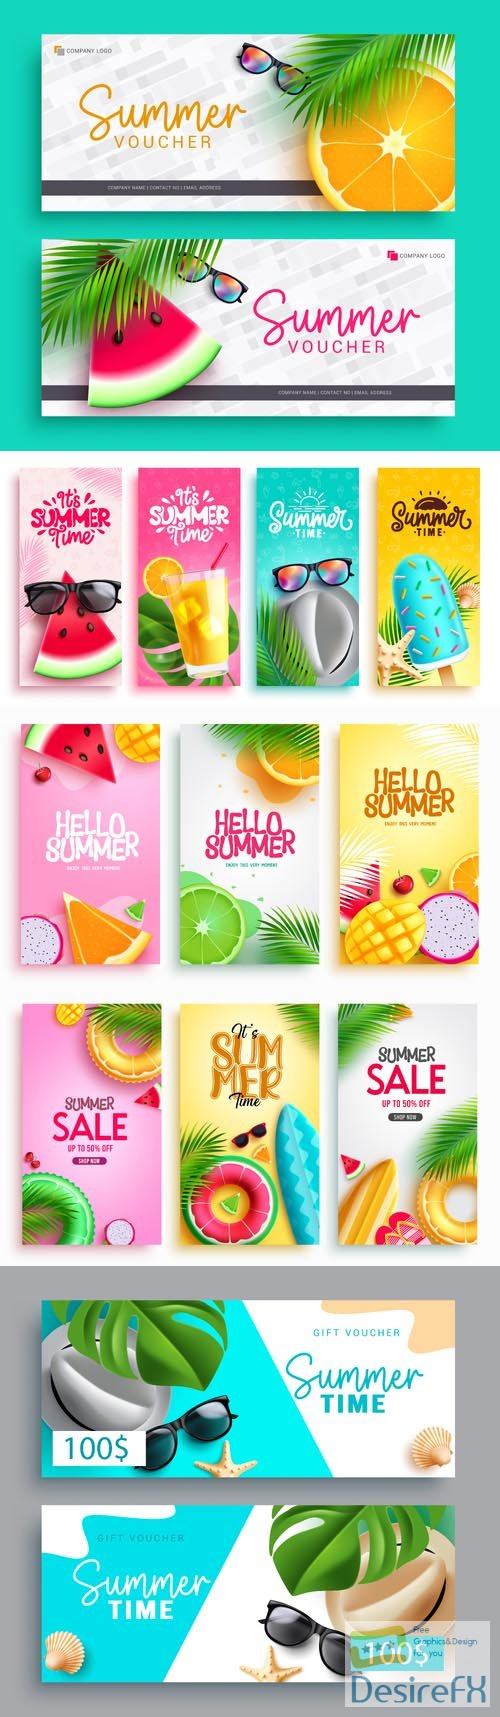 Summer poster vector set, summer sale offer discount